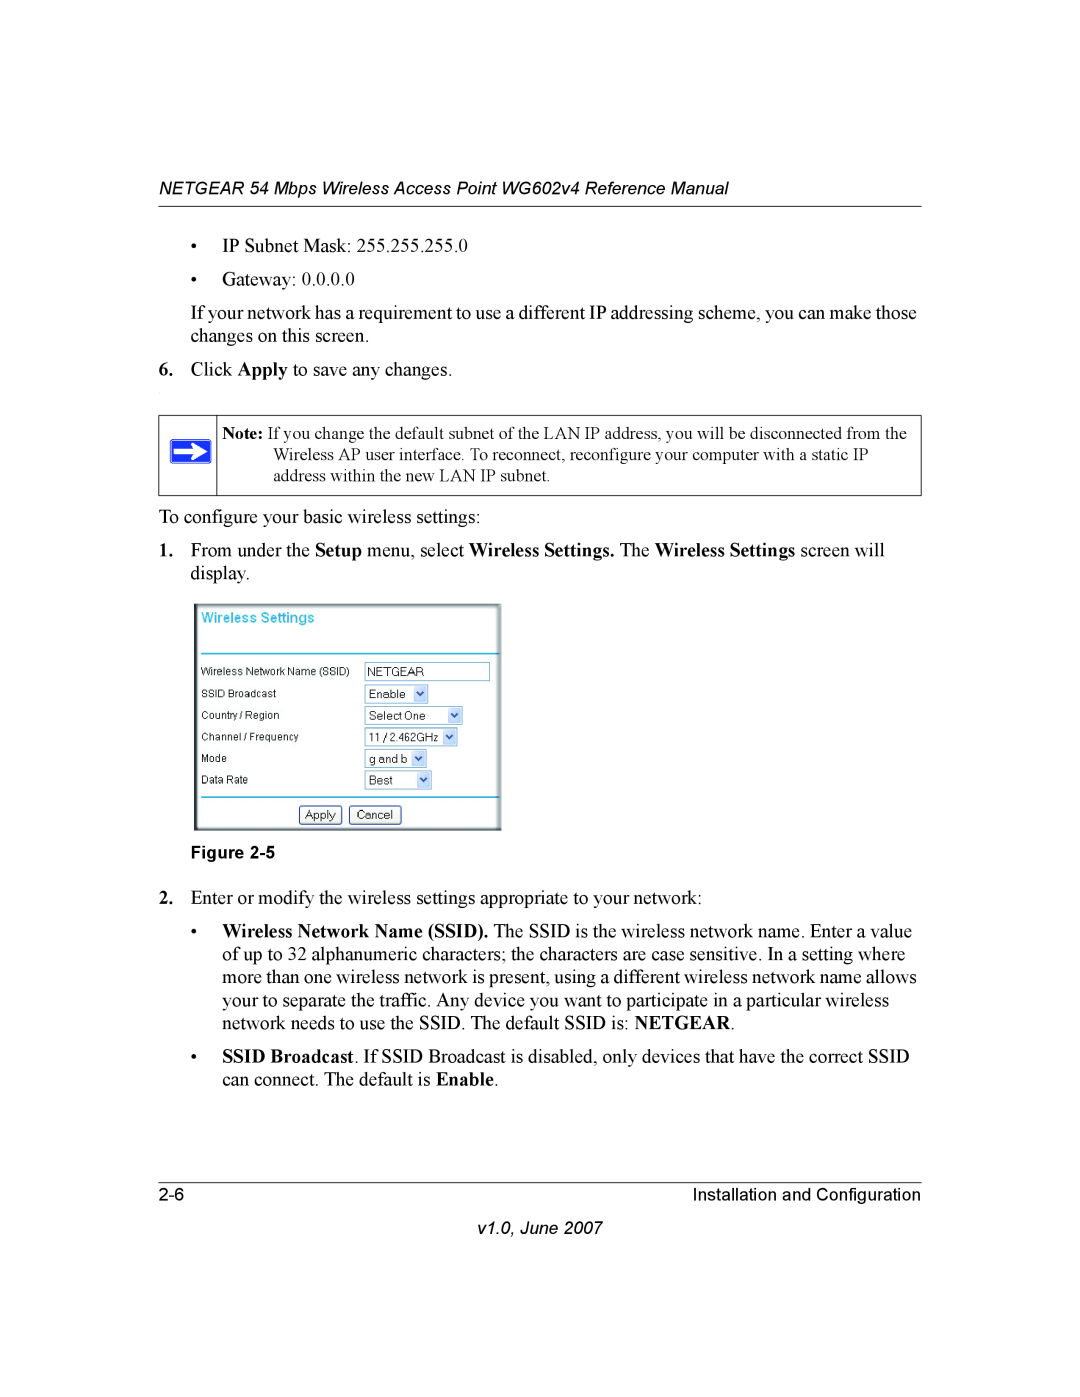 NETGEAR WG602V4 manual IP Subnet Mask Gateway 